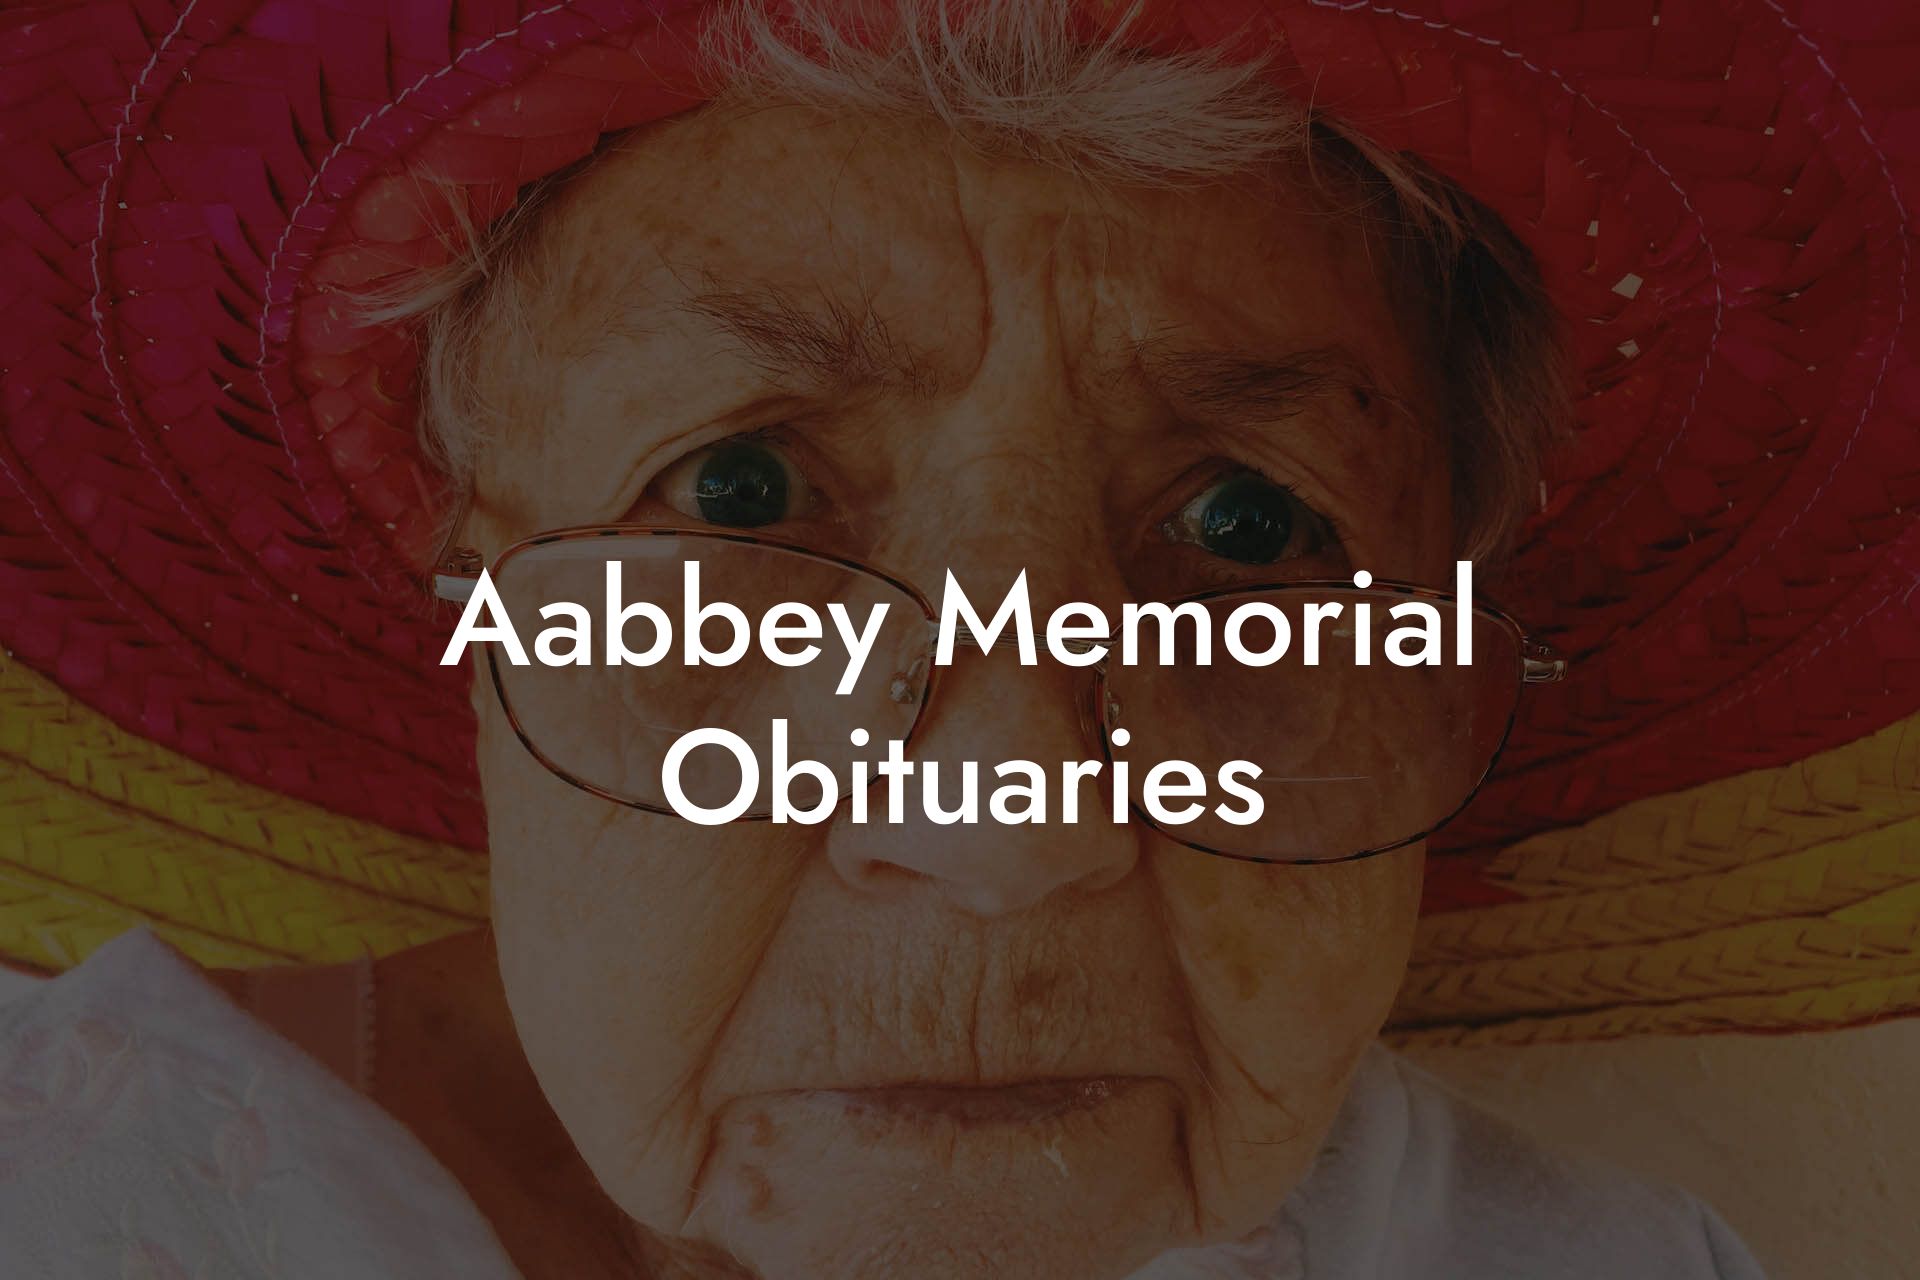 Aabbey Memorial Obituaries